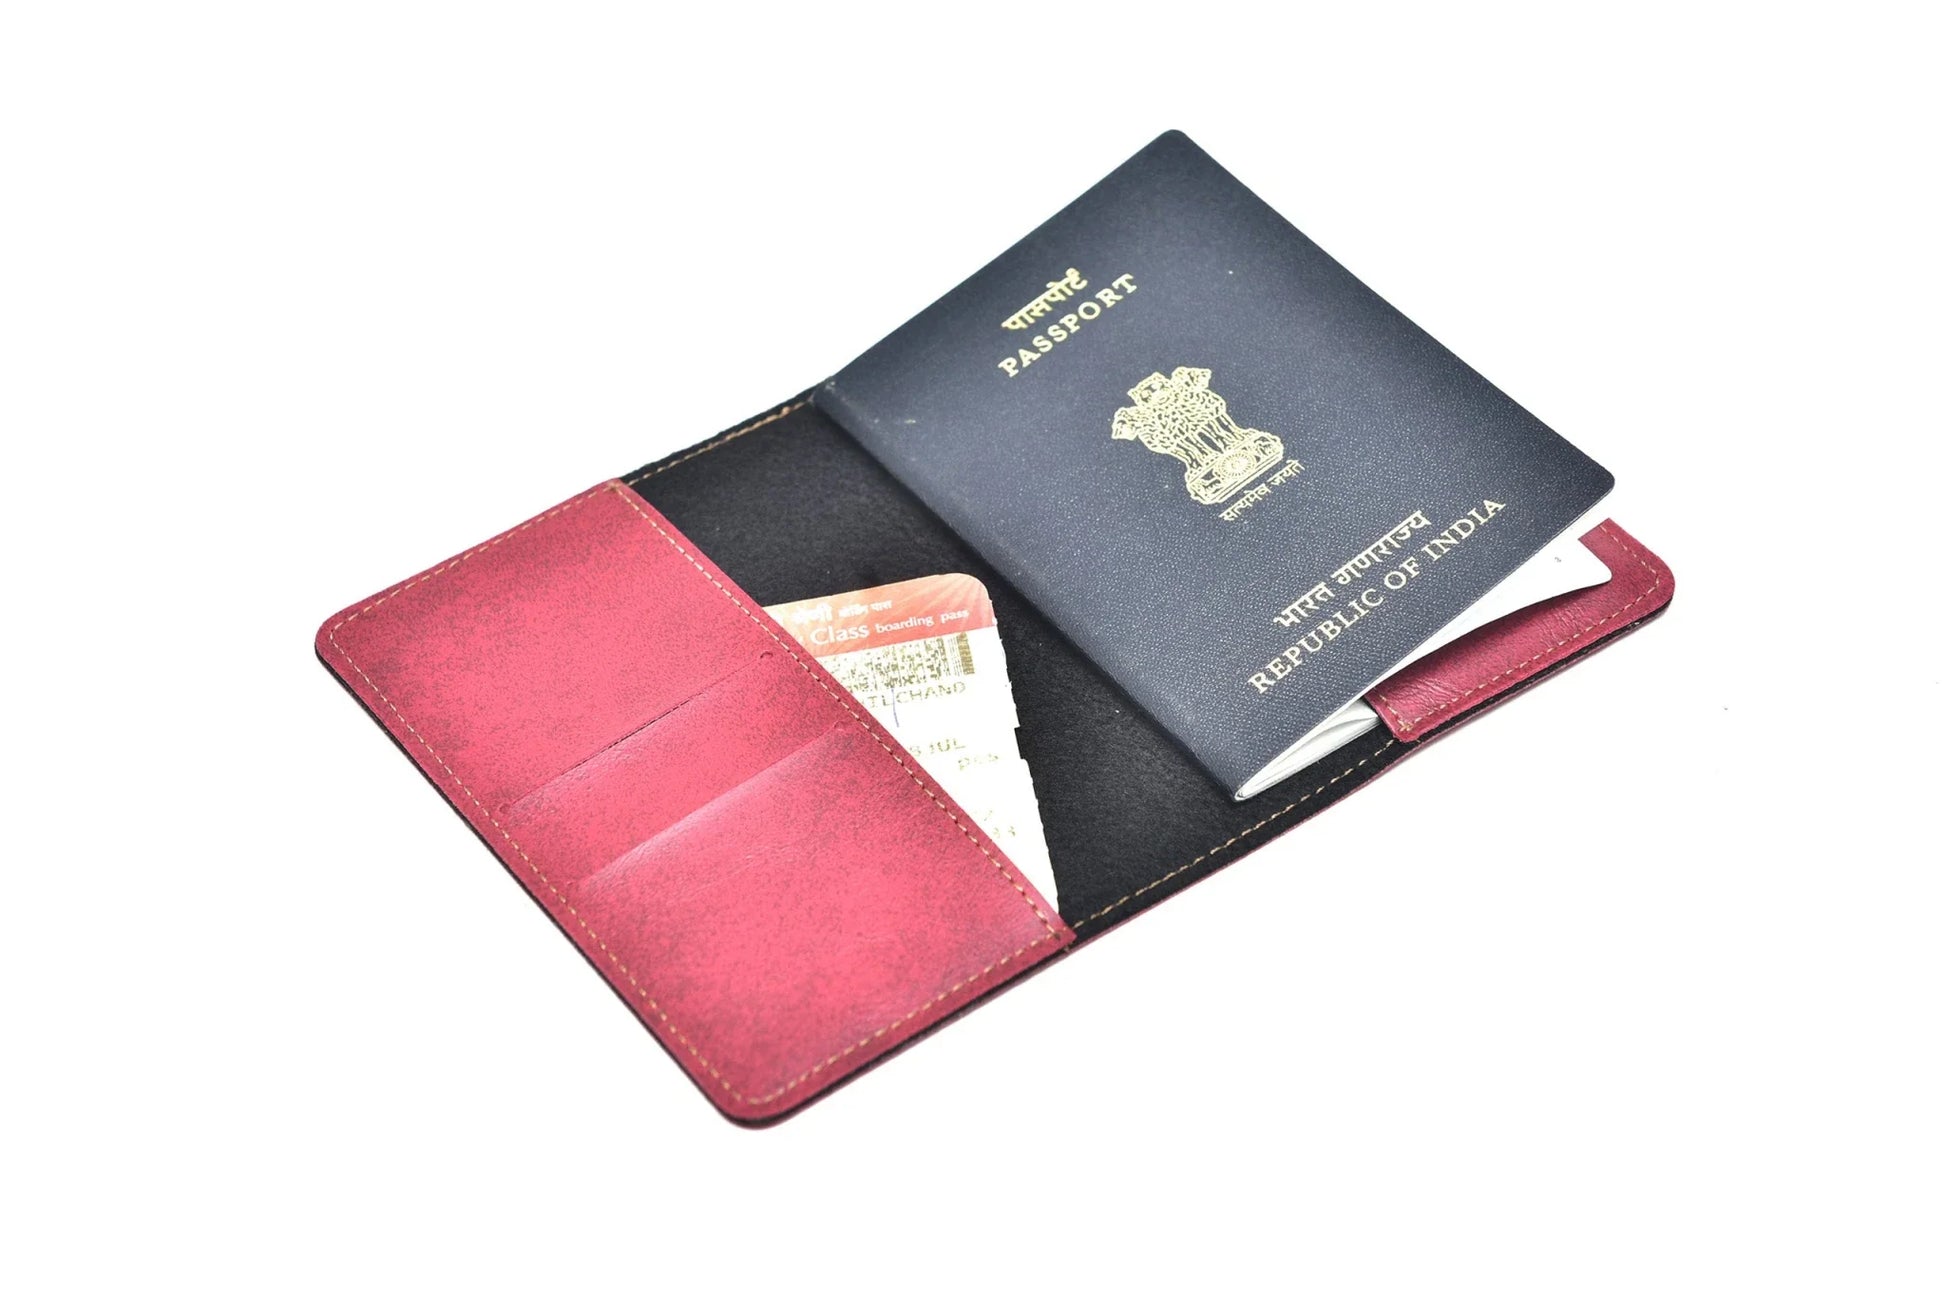 Inside or open view of maroon passport